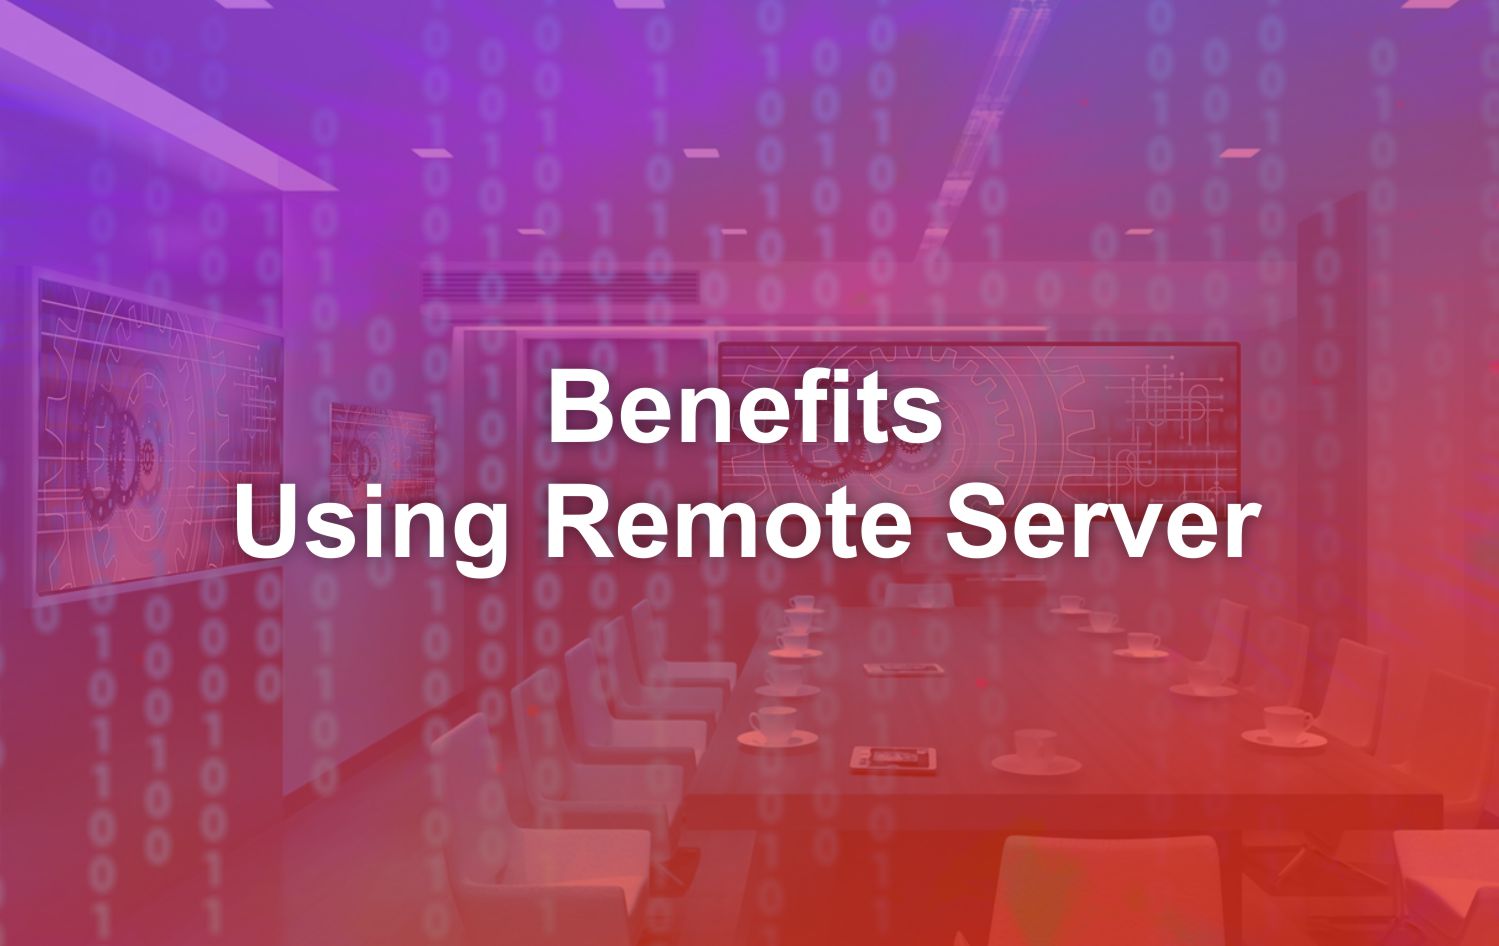 Benefits of Using Remote Server